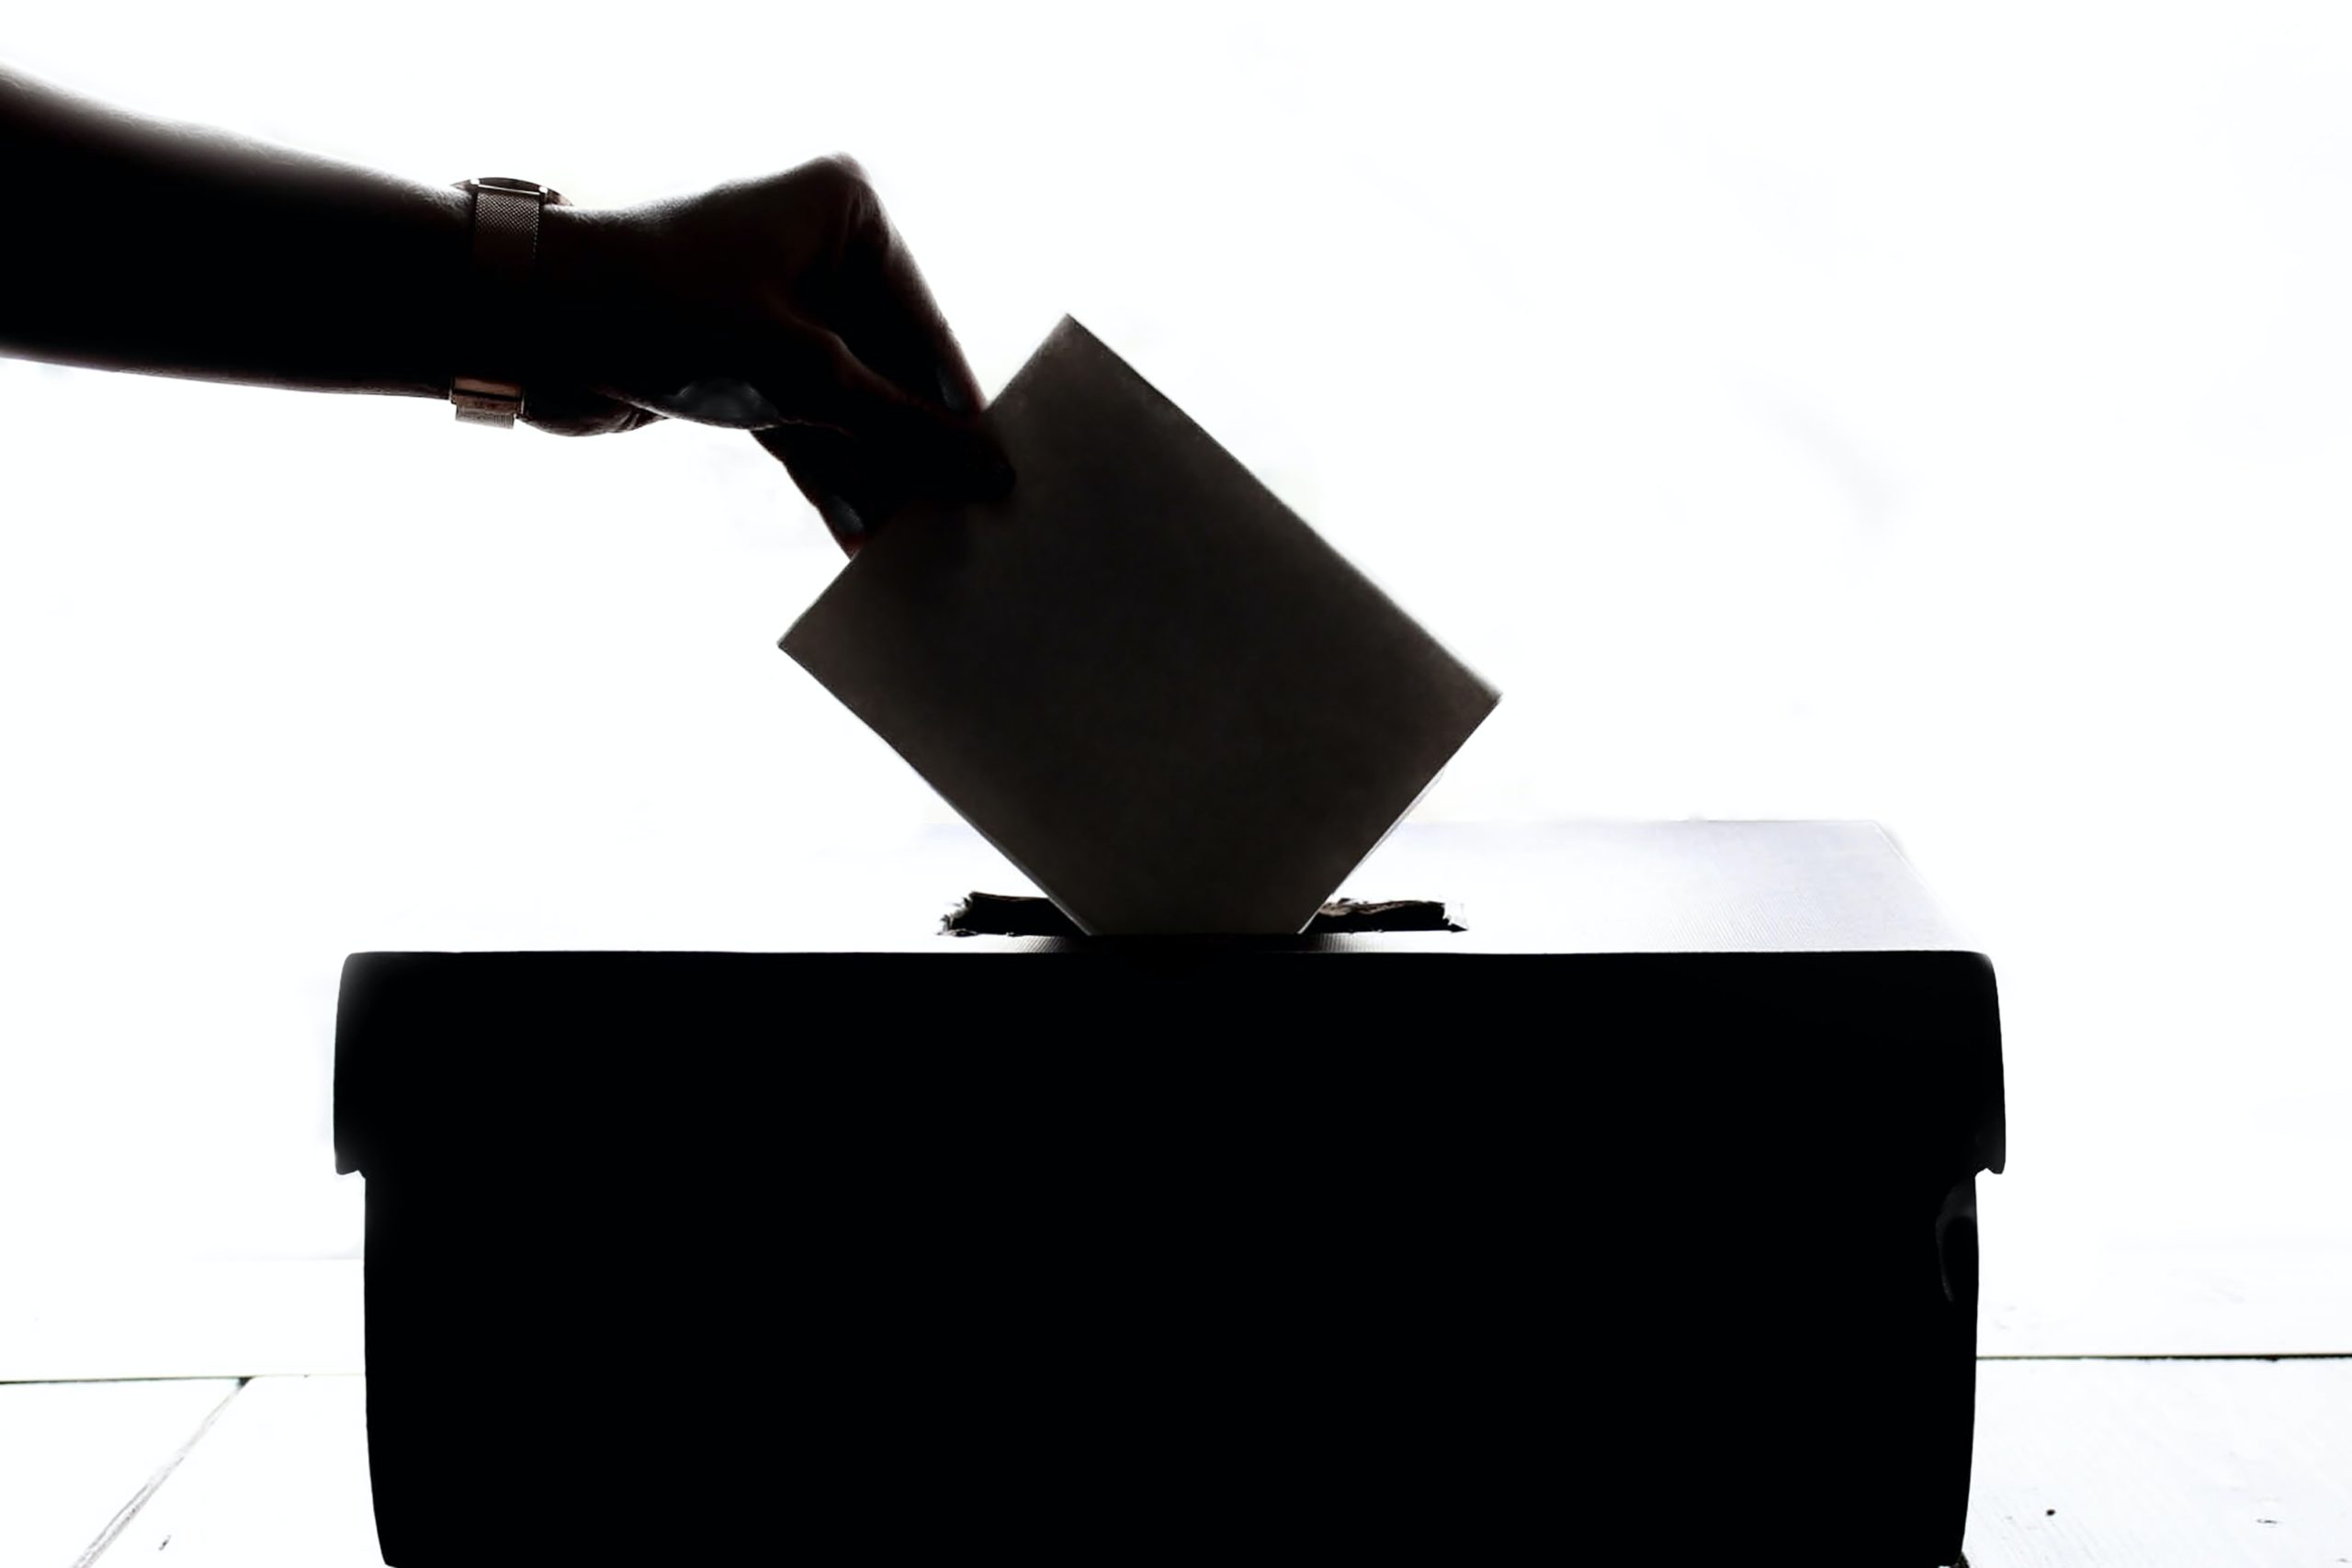 Silhouette of a ballot being dropped into a ballot box